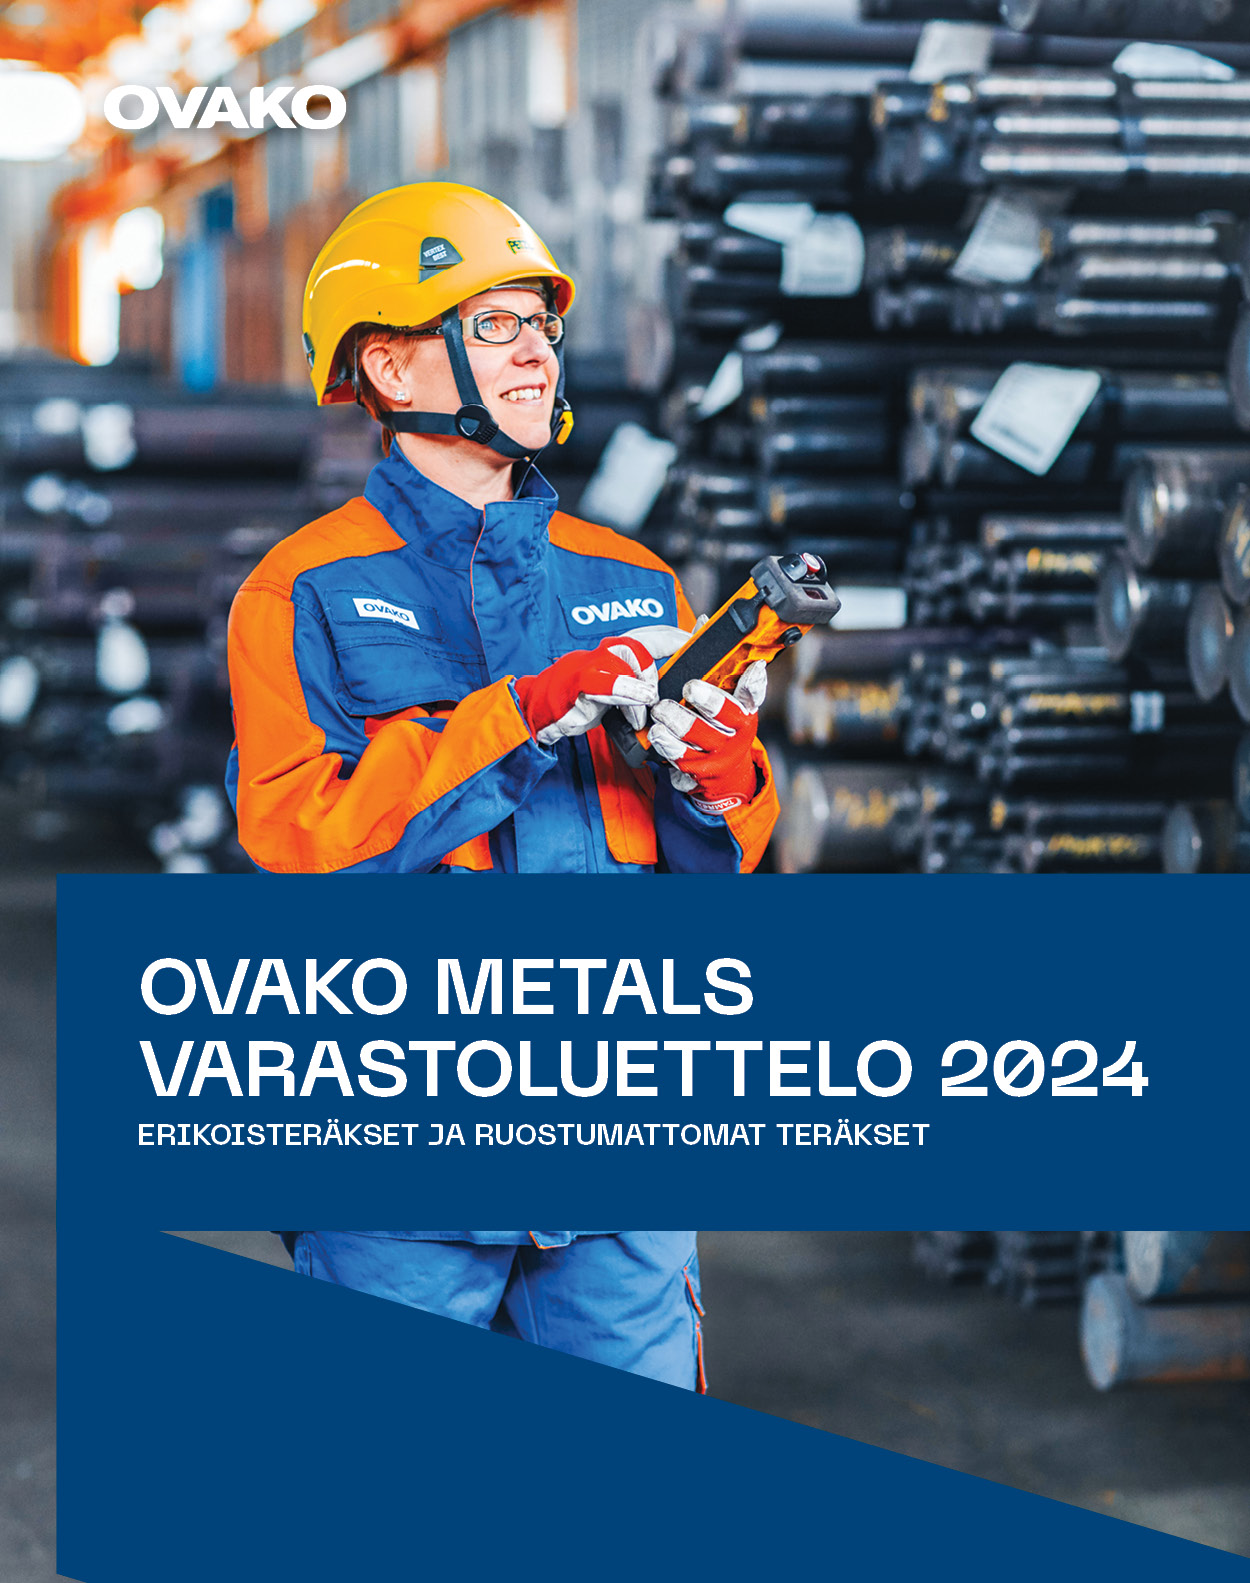 Ovako metals product catalog